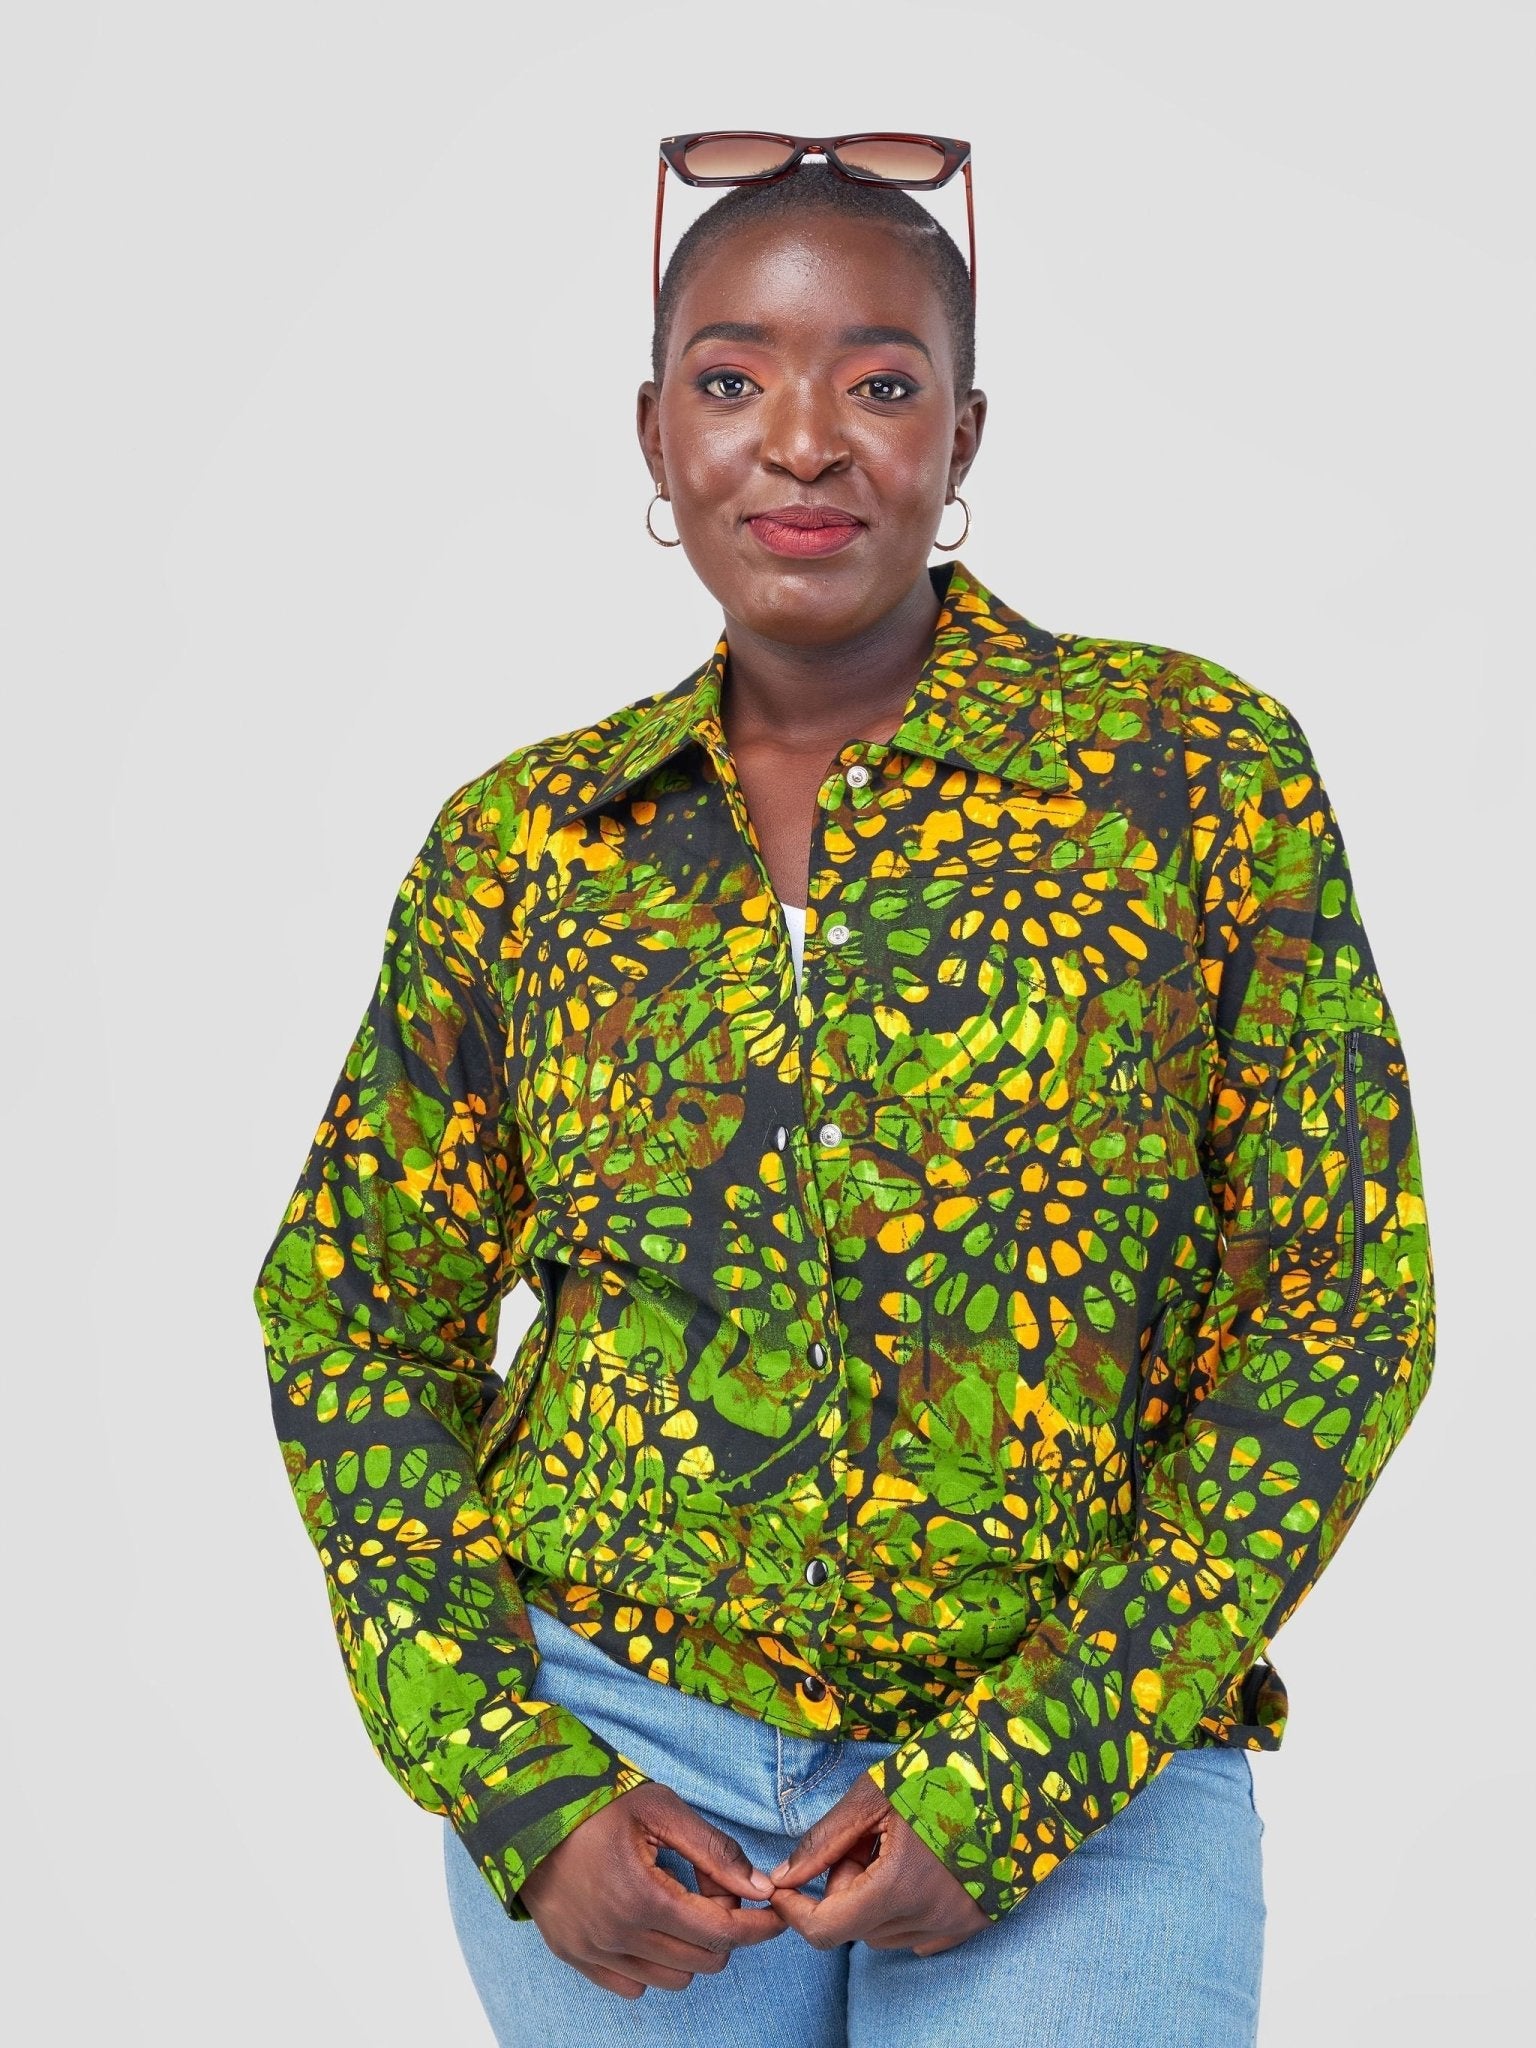 Jacke ‚Bustani‘ für 70 € - mikono.africa Jacken aus Kenia bunte Bomberjacke Partyjacke faire sozial nachhaltig designed in Kenia